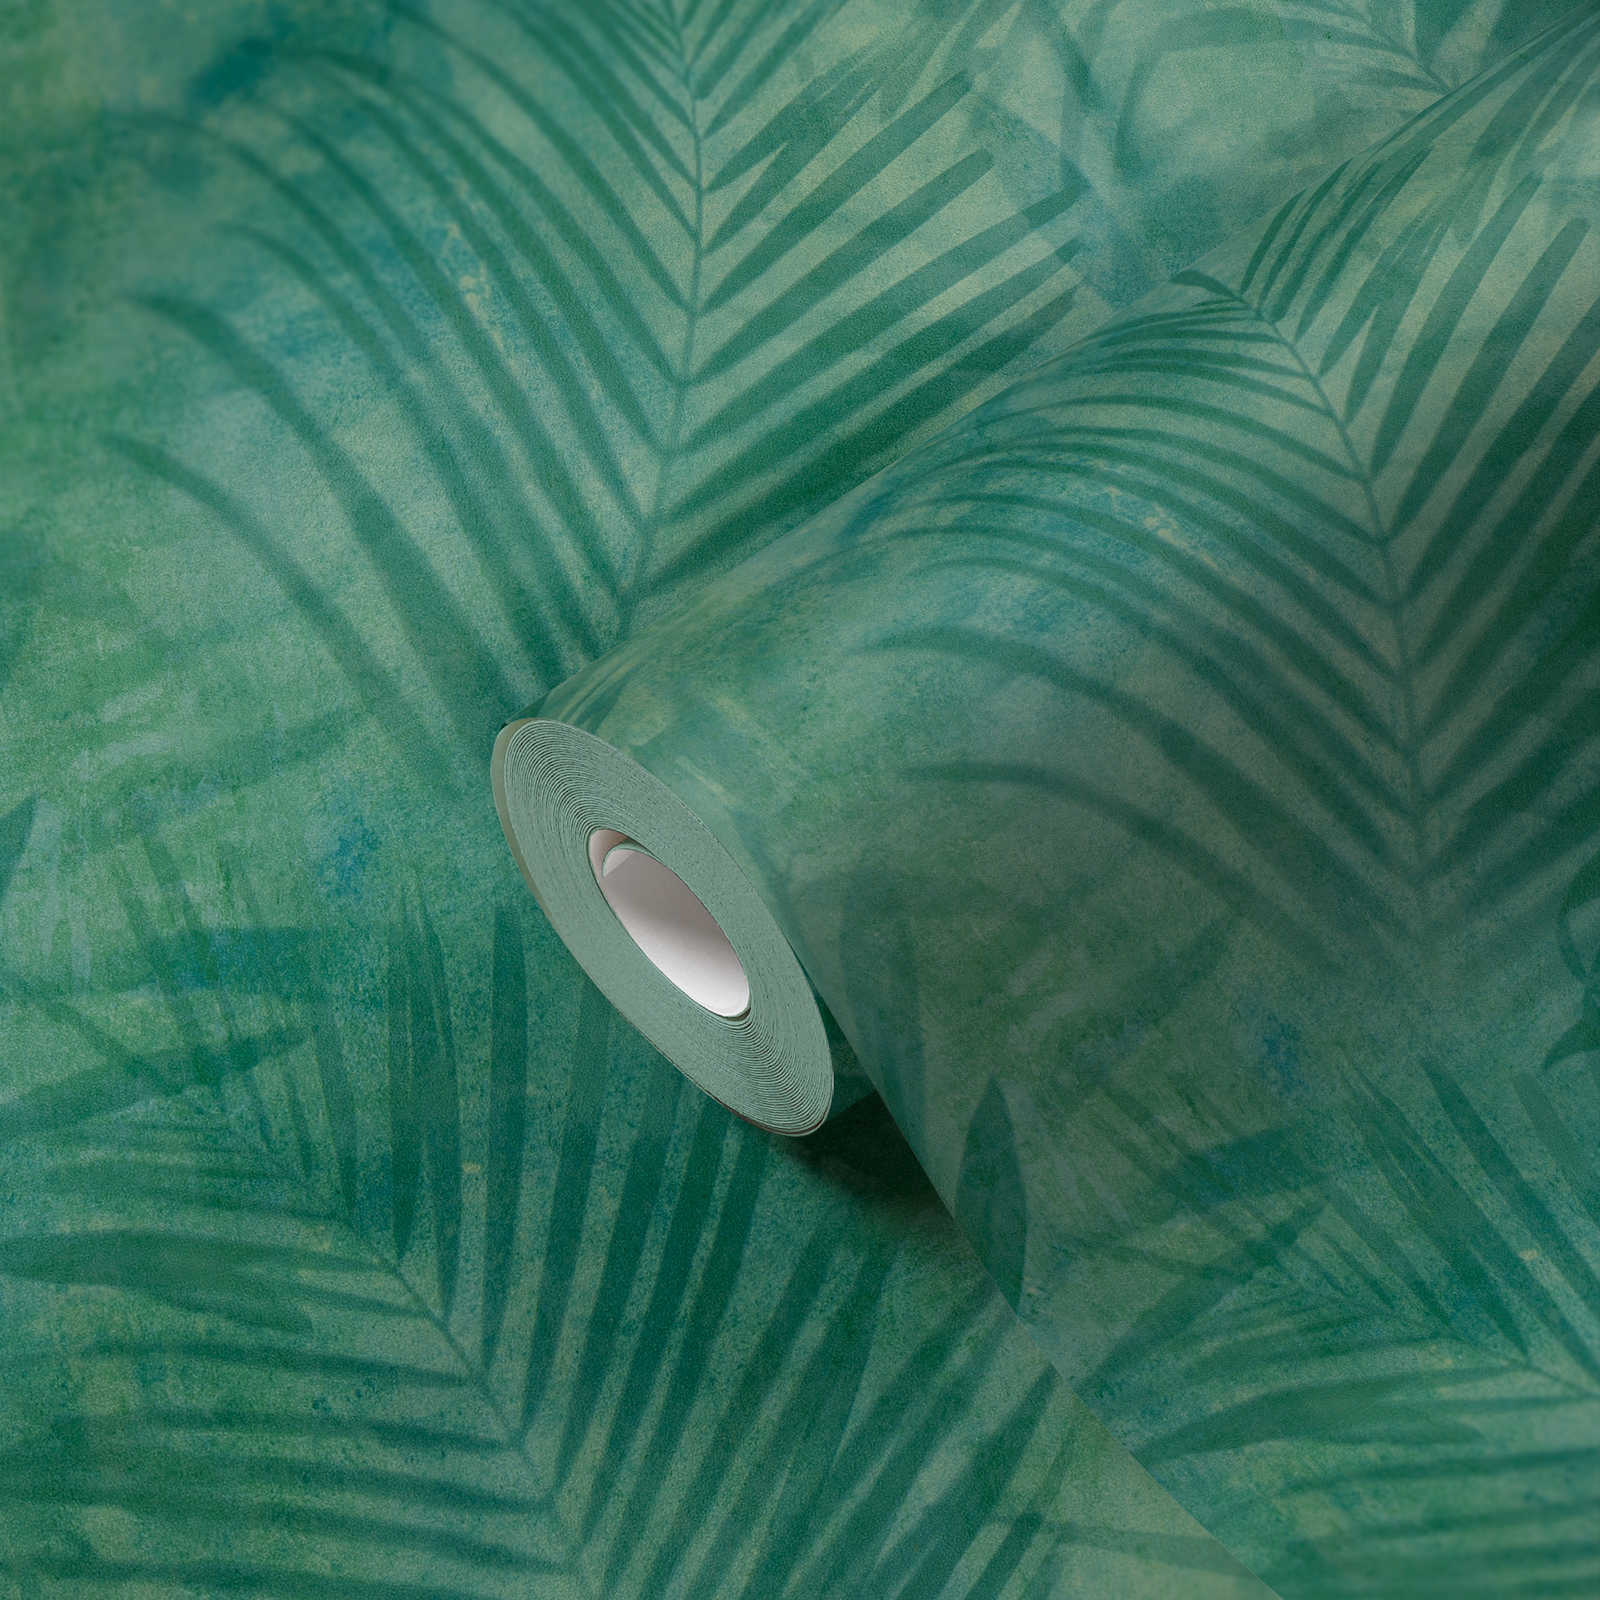             papel pintado con motivos de palmeras en aspecto de lino - verde, azul, amarillo
        